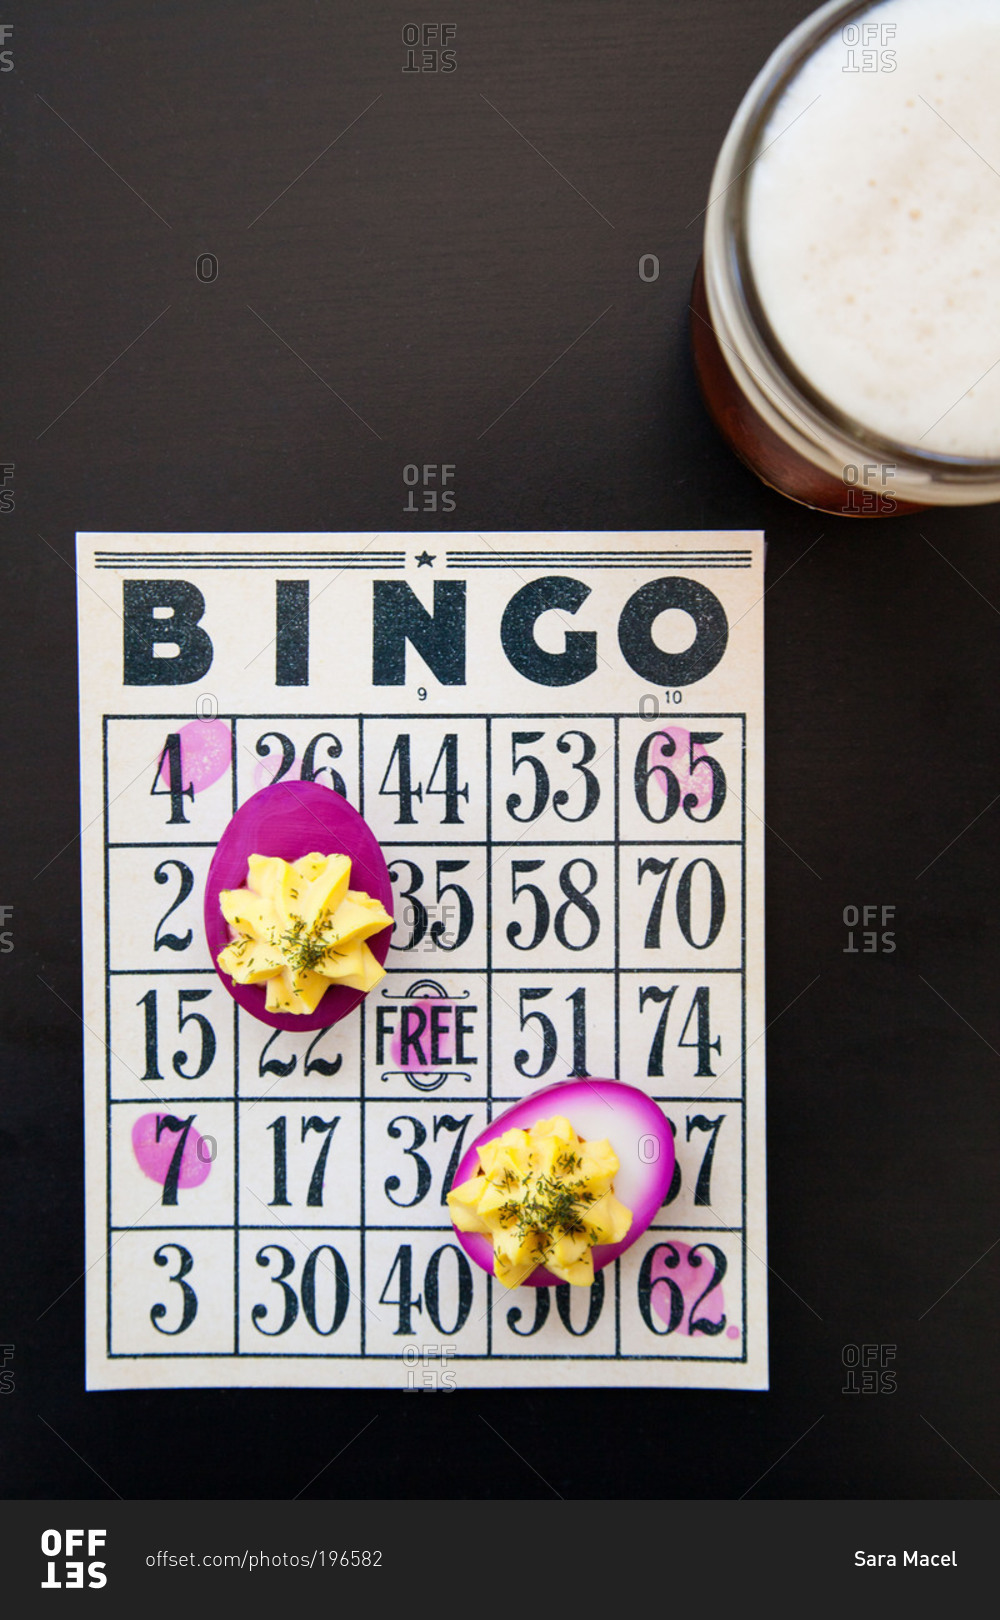 Deviled eggs on a bingo board